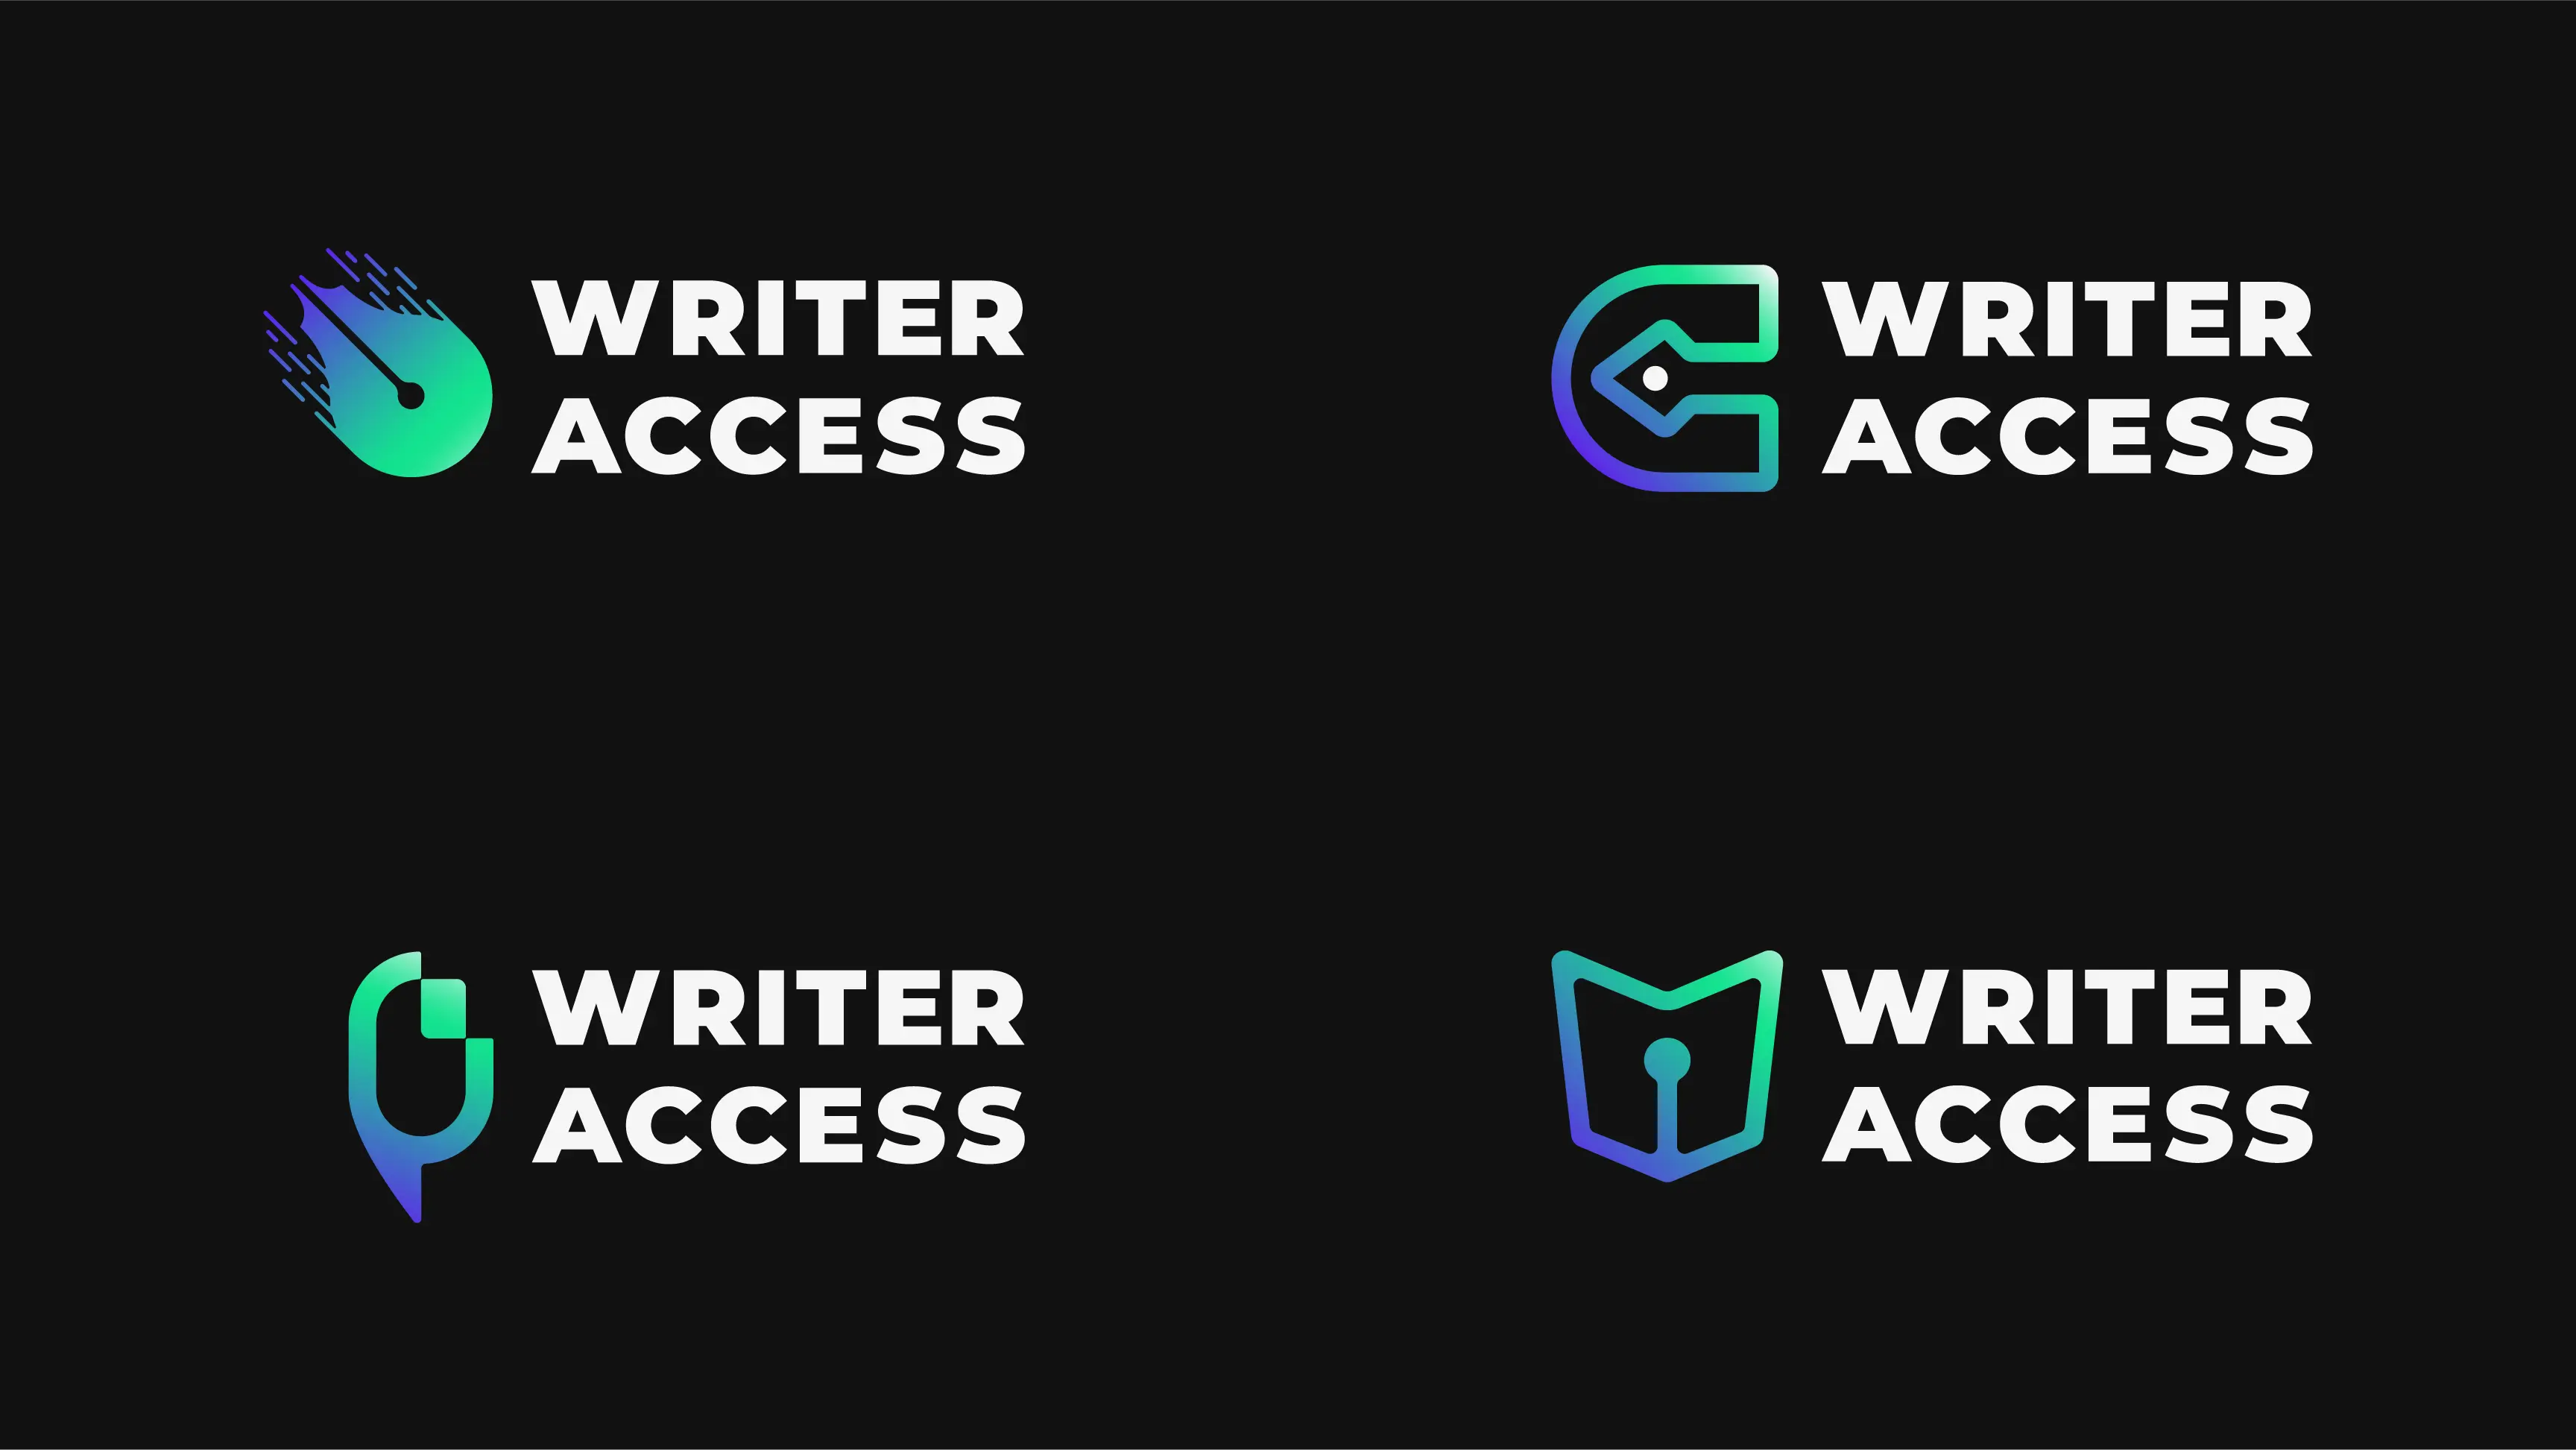 Writer Access logos